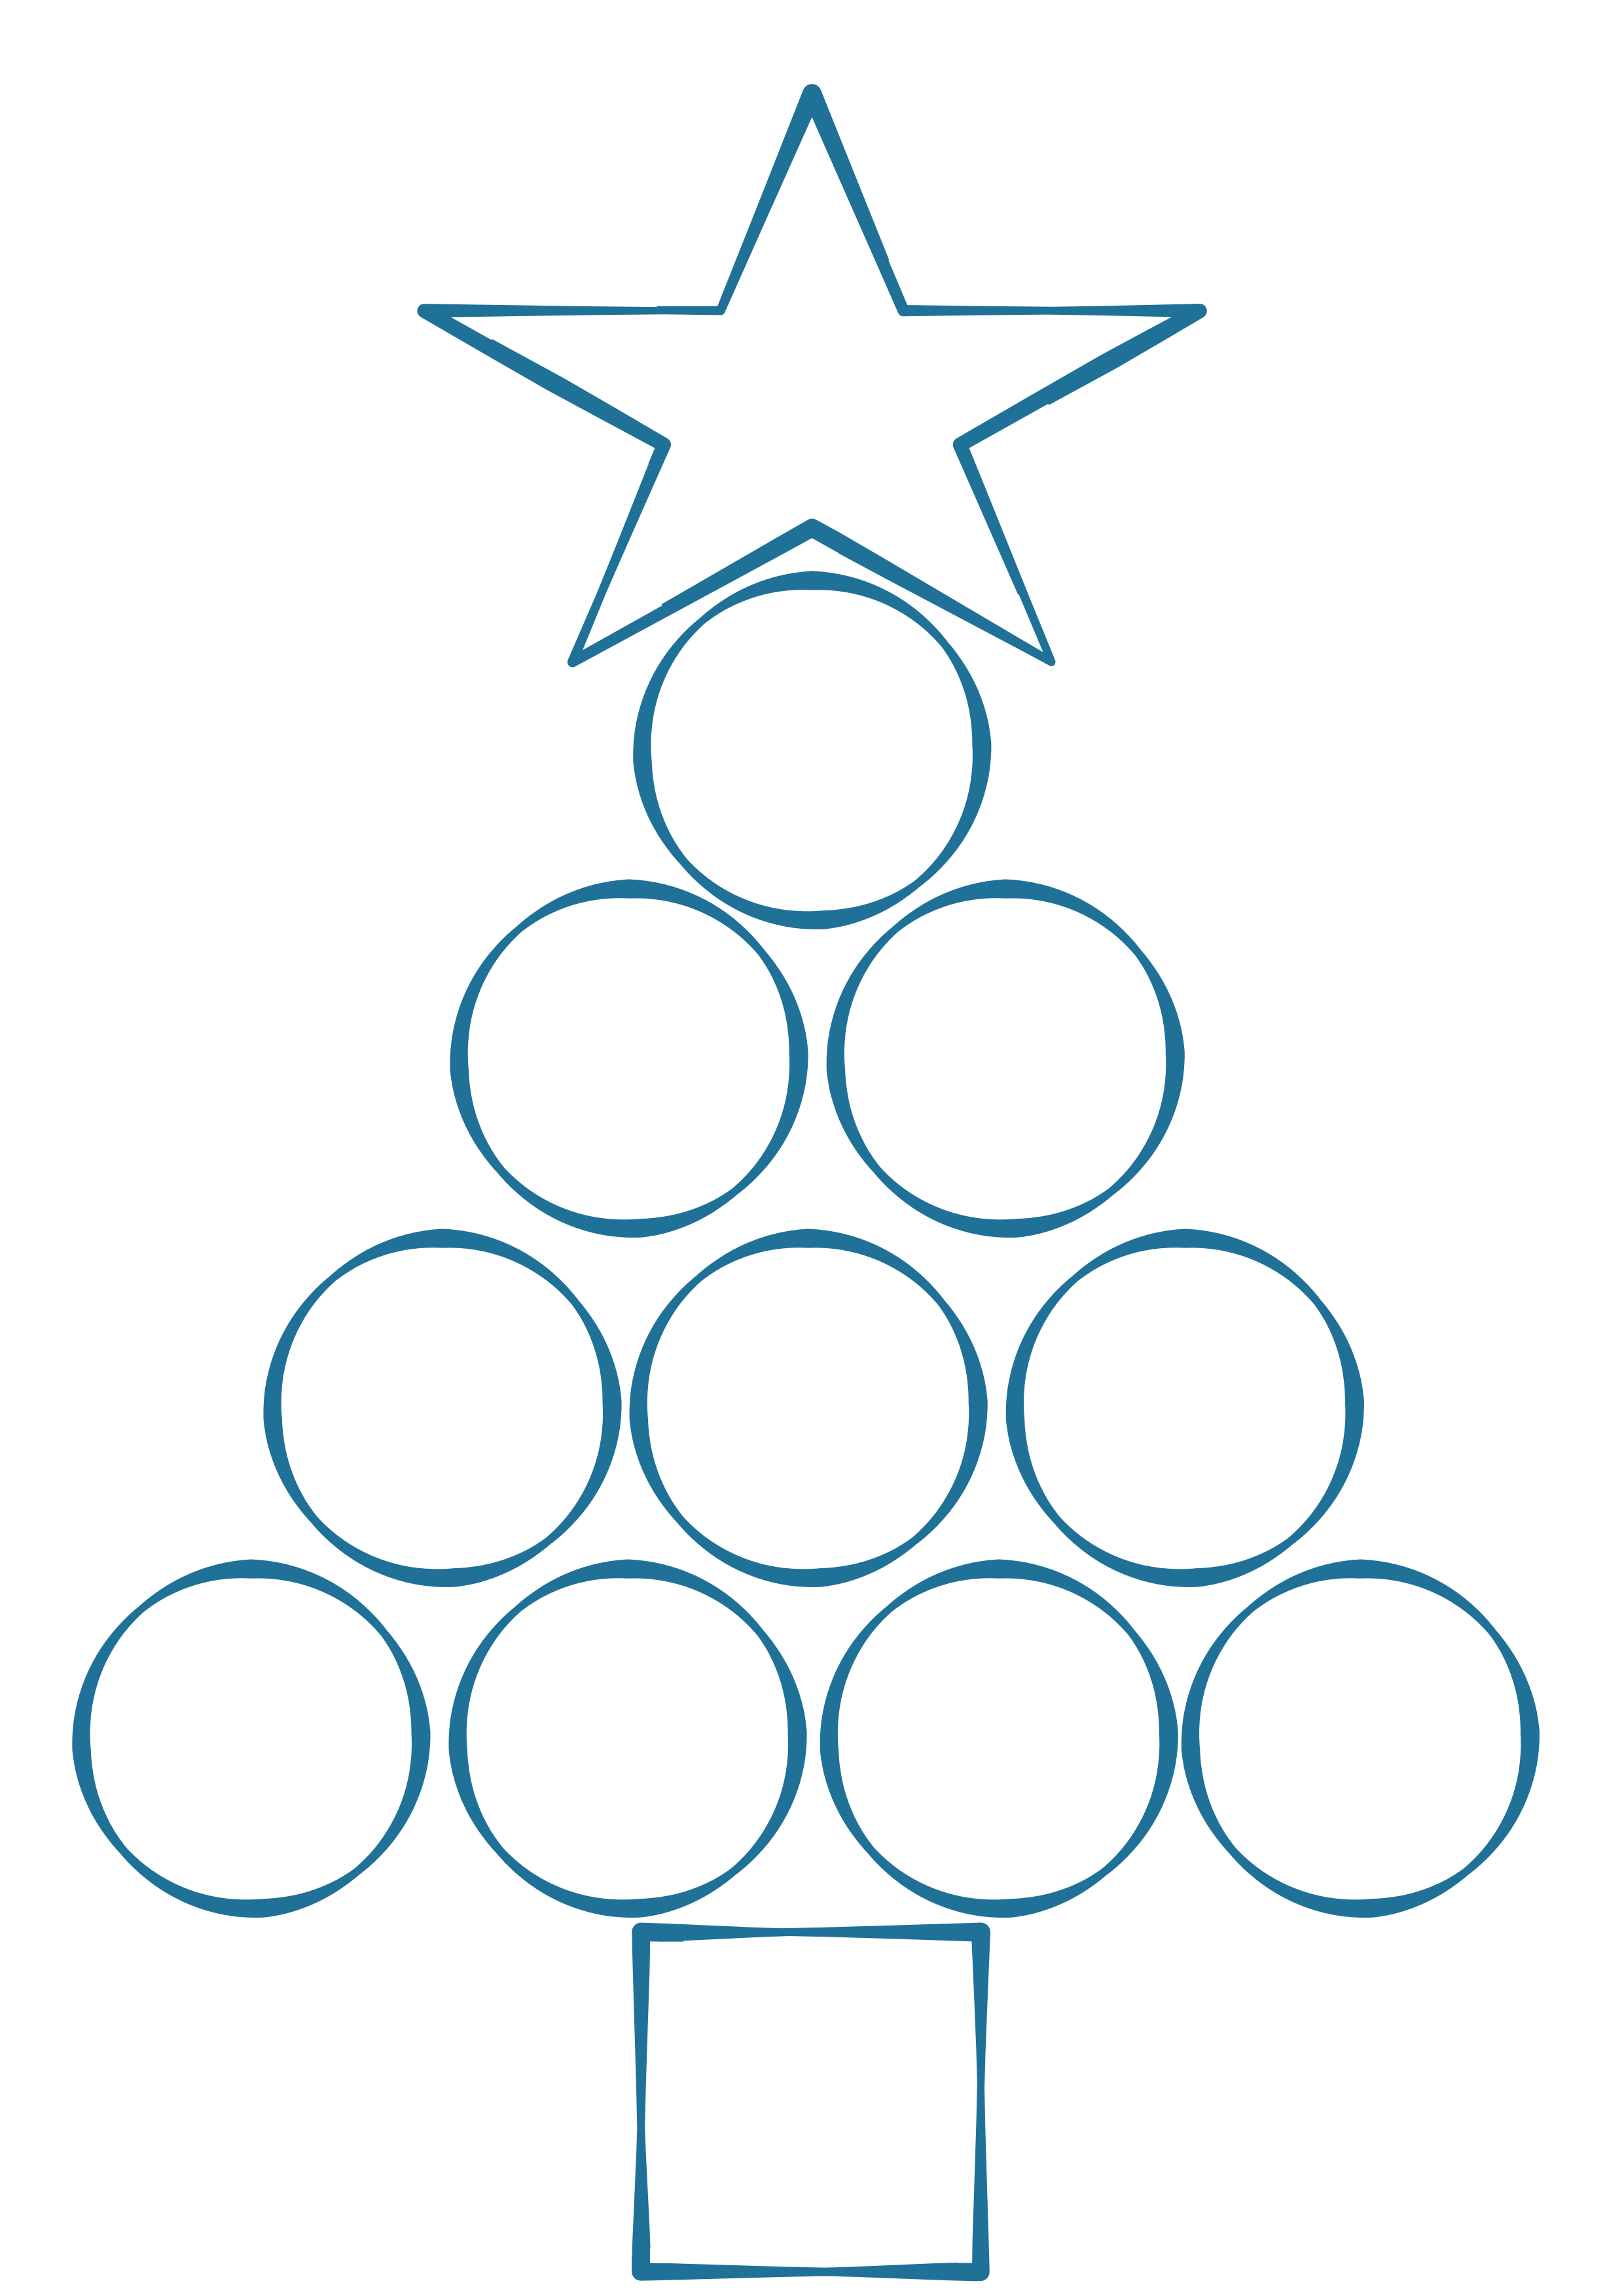 Diagram of Christmas tree